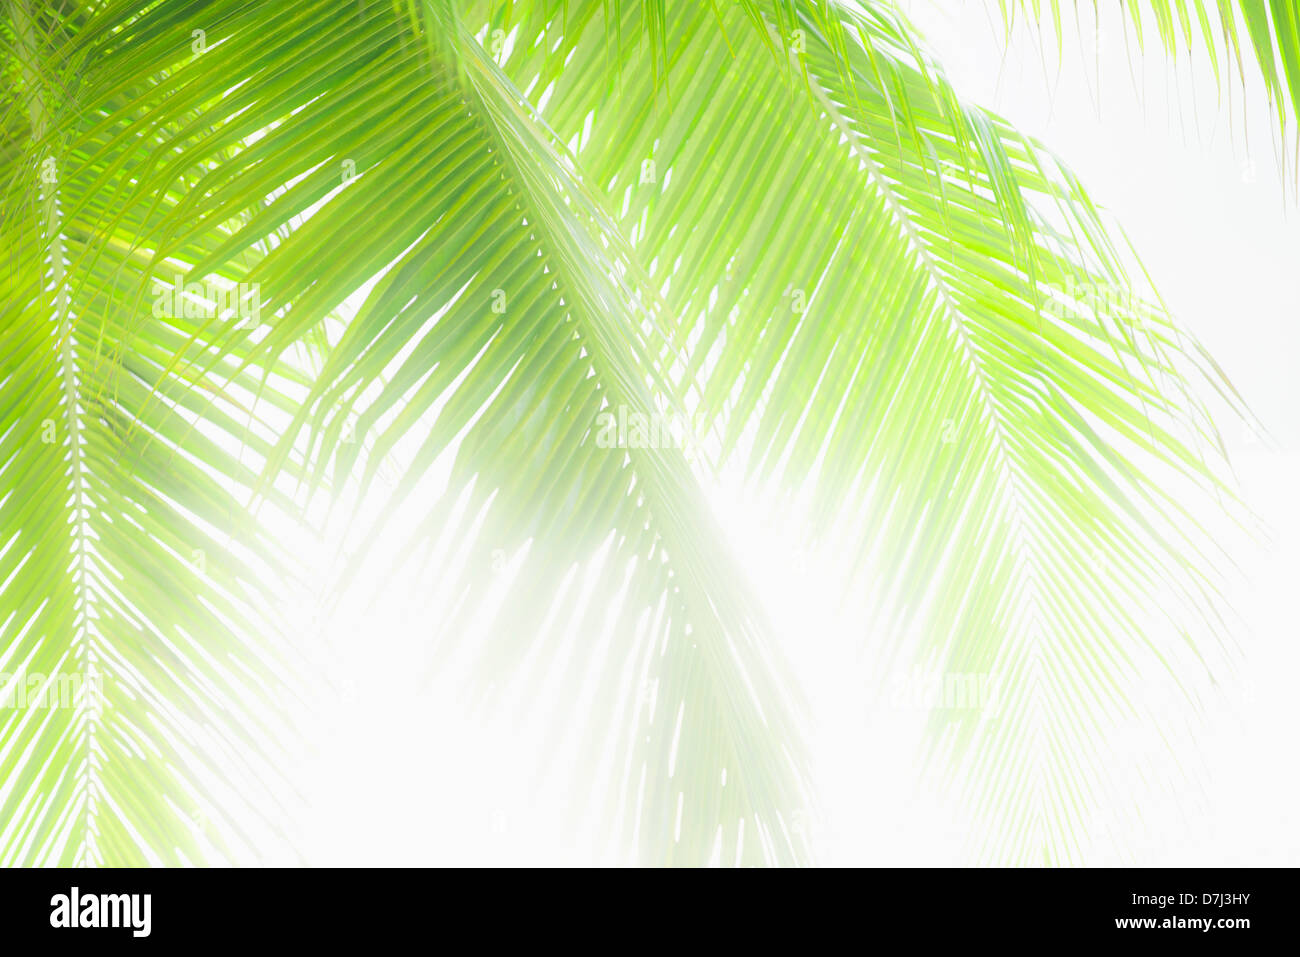 Jamaica, Sunlit palm leaves Stock Photo